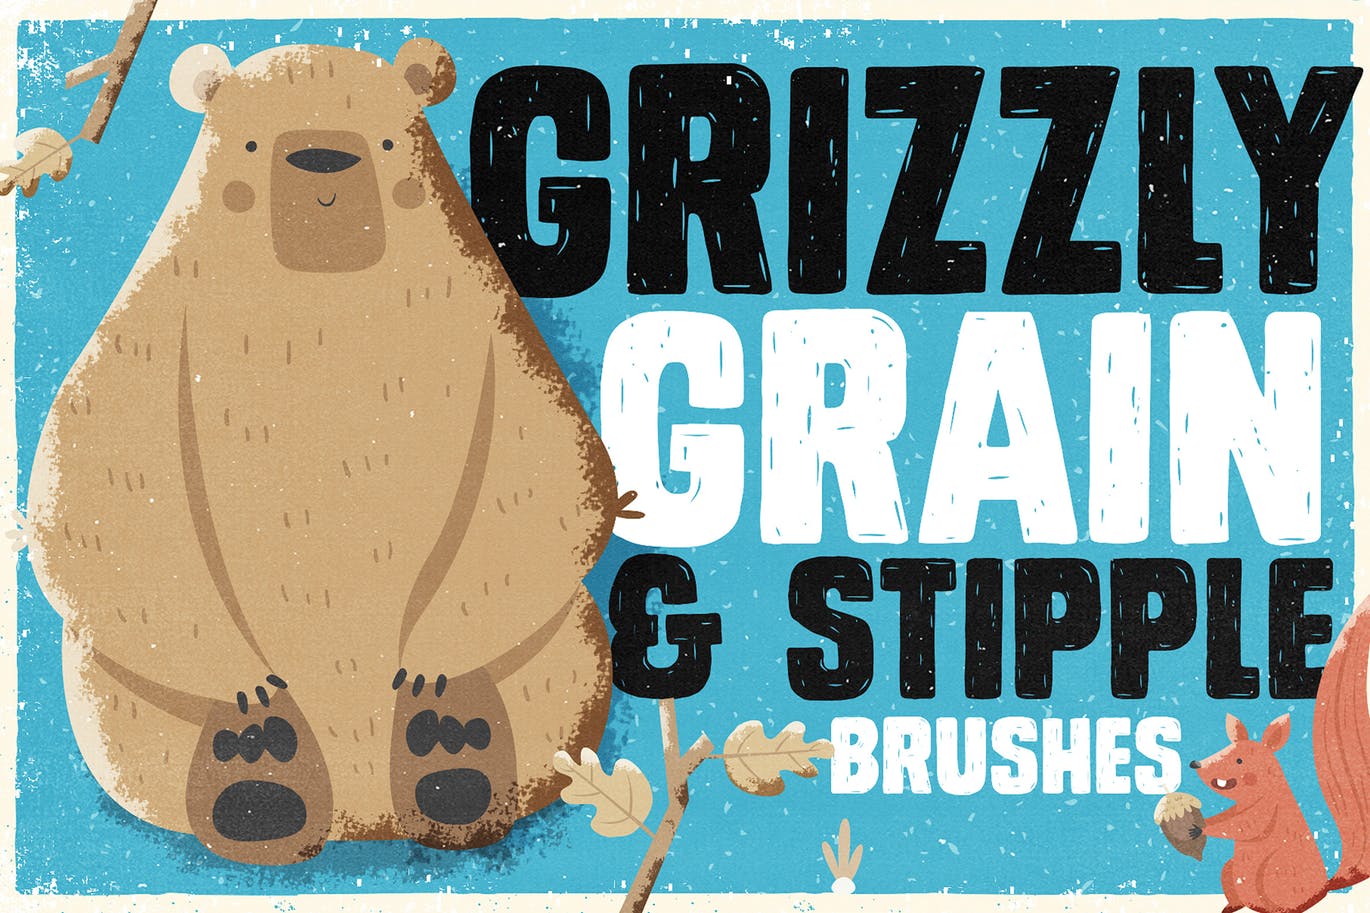 手绘设计师必备-流行的仿旧阴影效果点画创作PS笔刷第一素材精选 Grizzly Grain & Stipple Shader Brushes插图